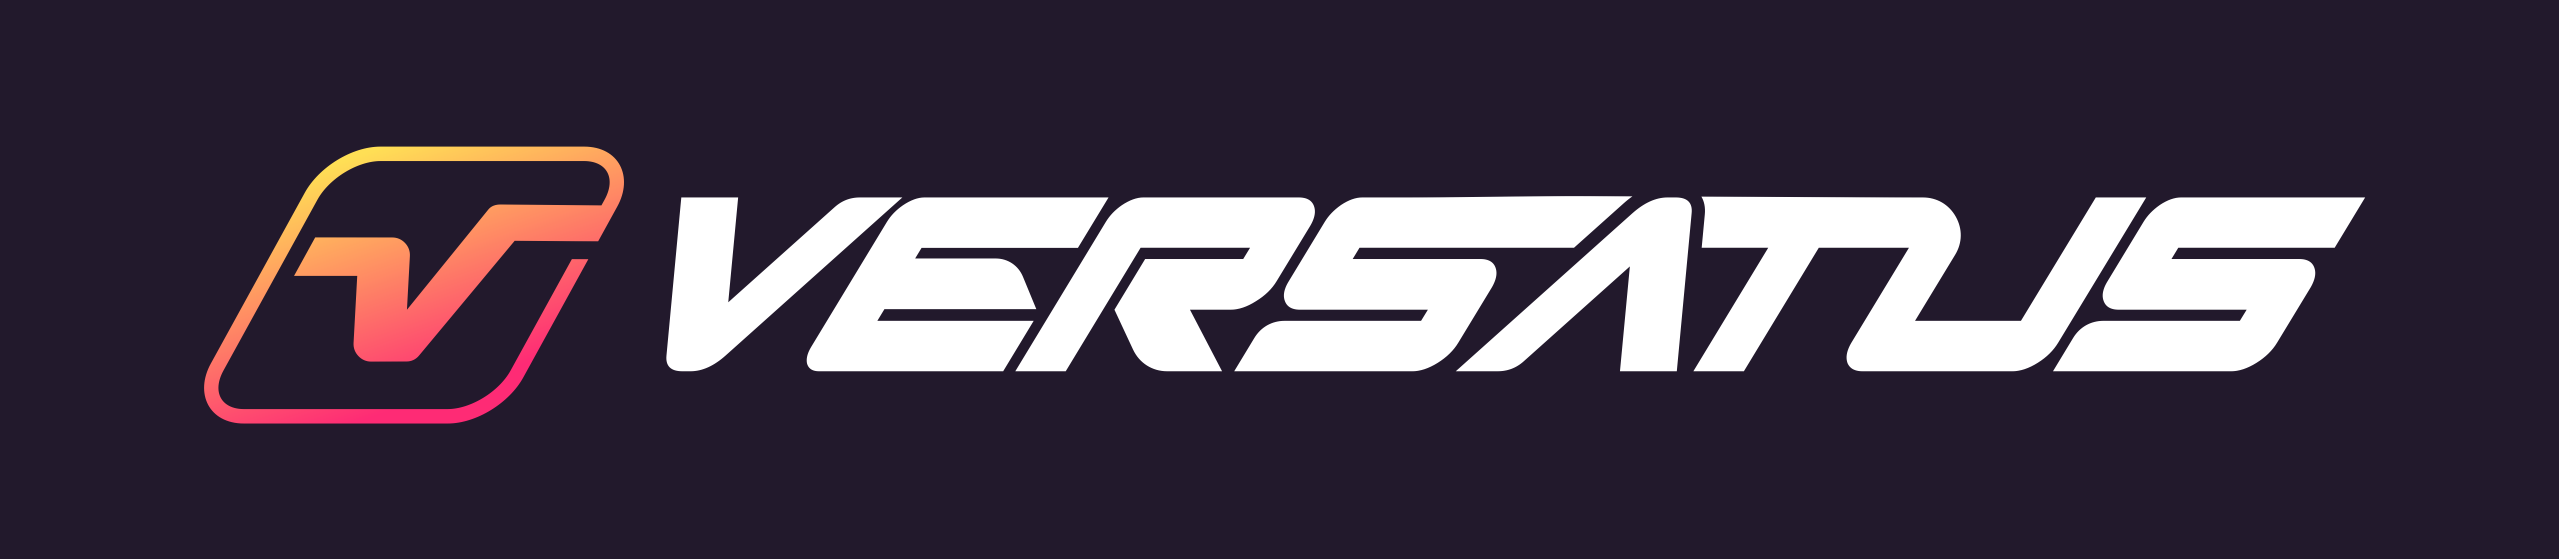 versatus logo